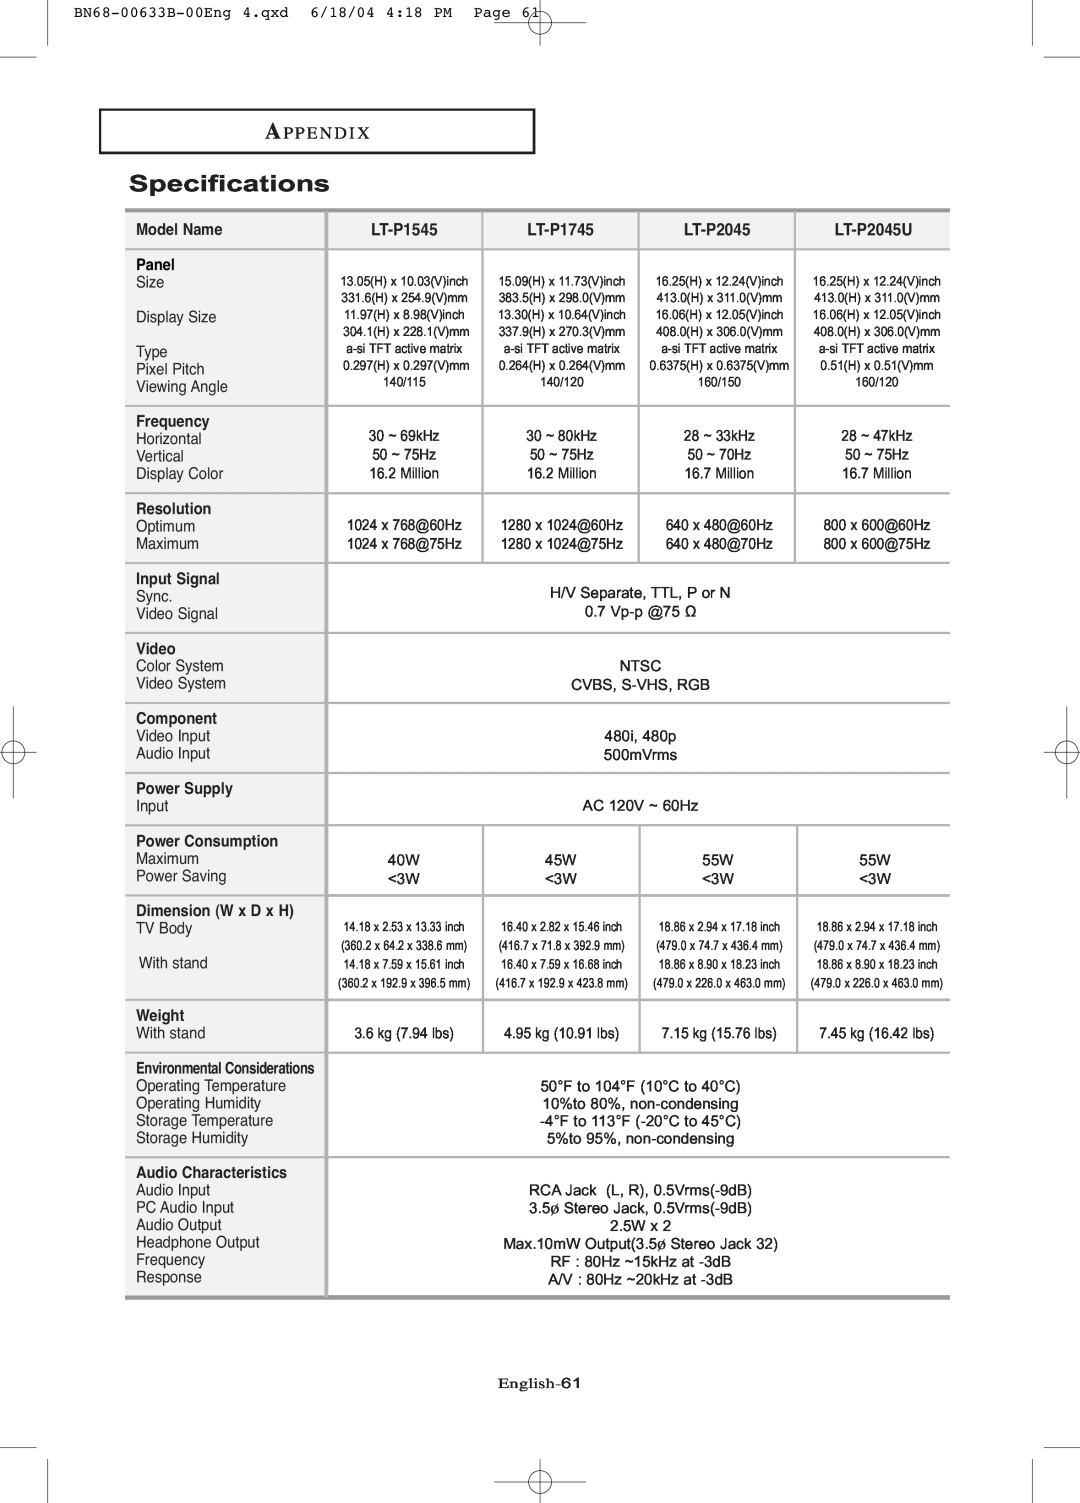 Samsung LT-P1545 manual Specifications, Ap P E N D I, LT-P1745, LT-P2045U 